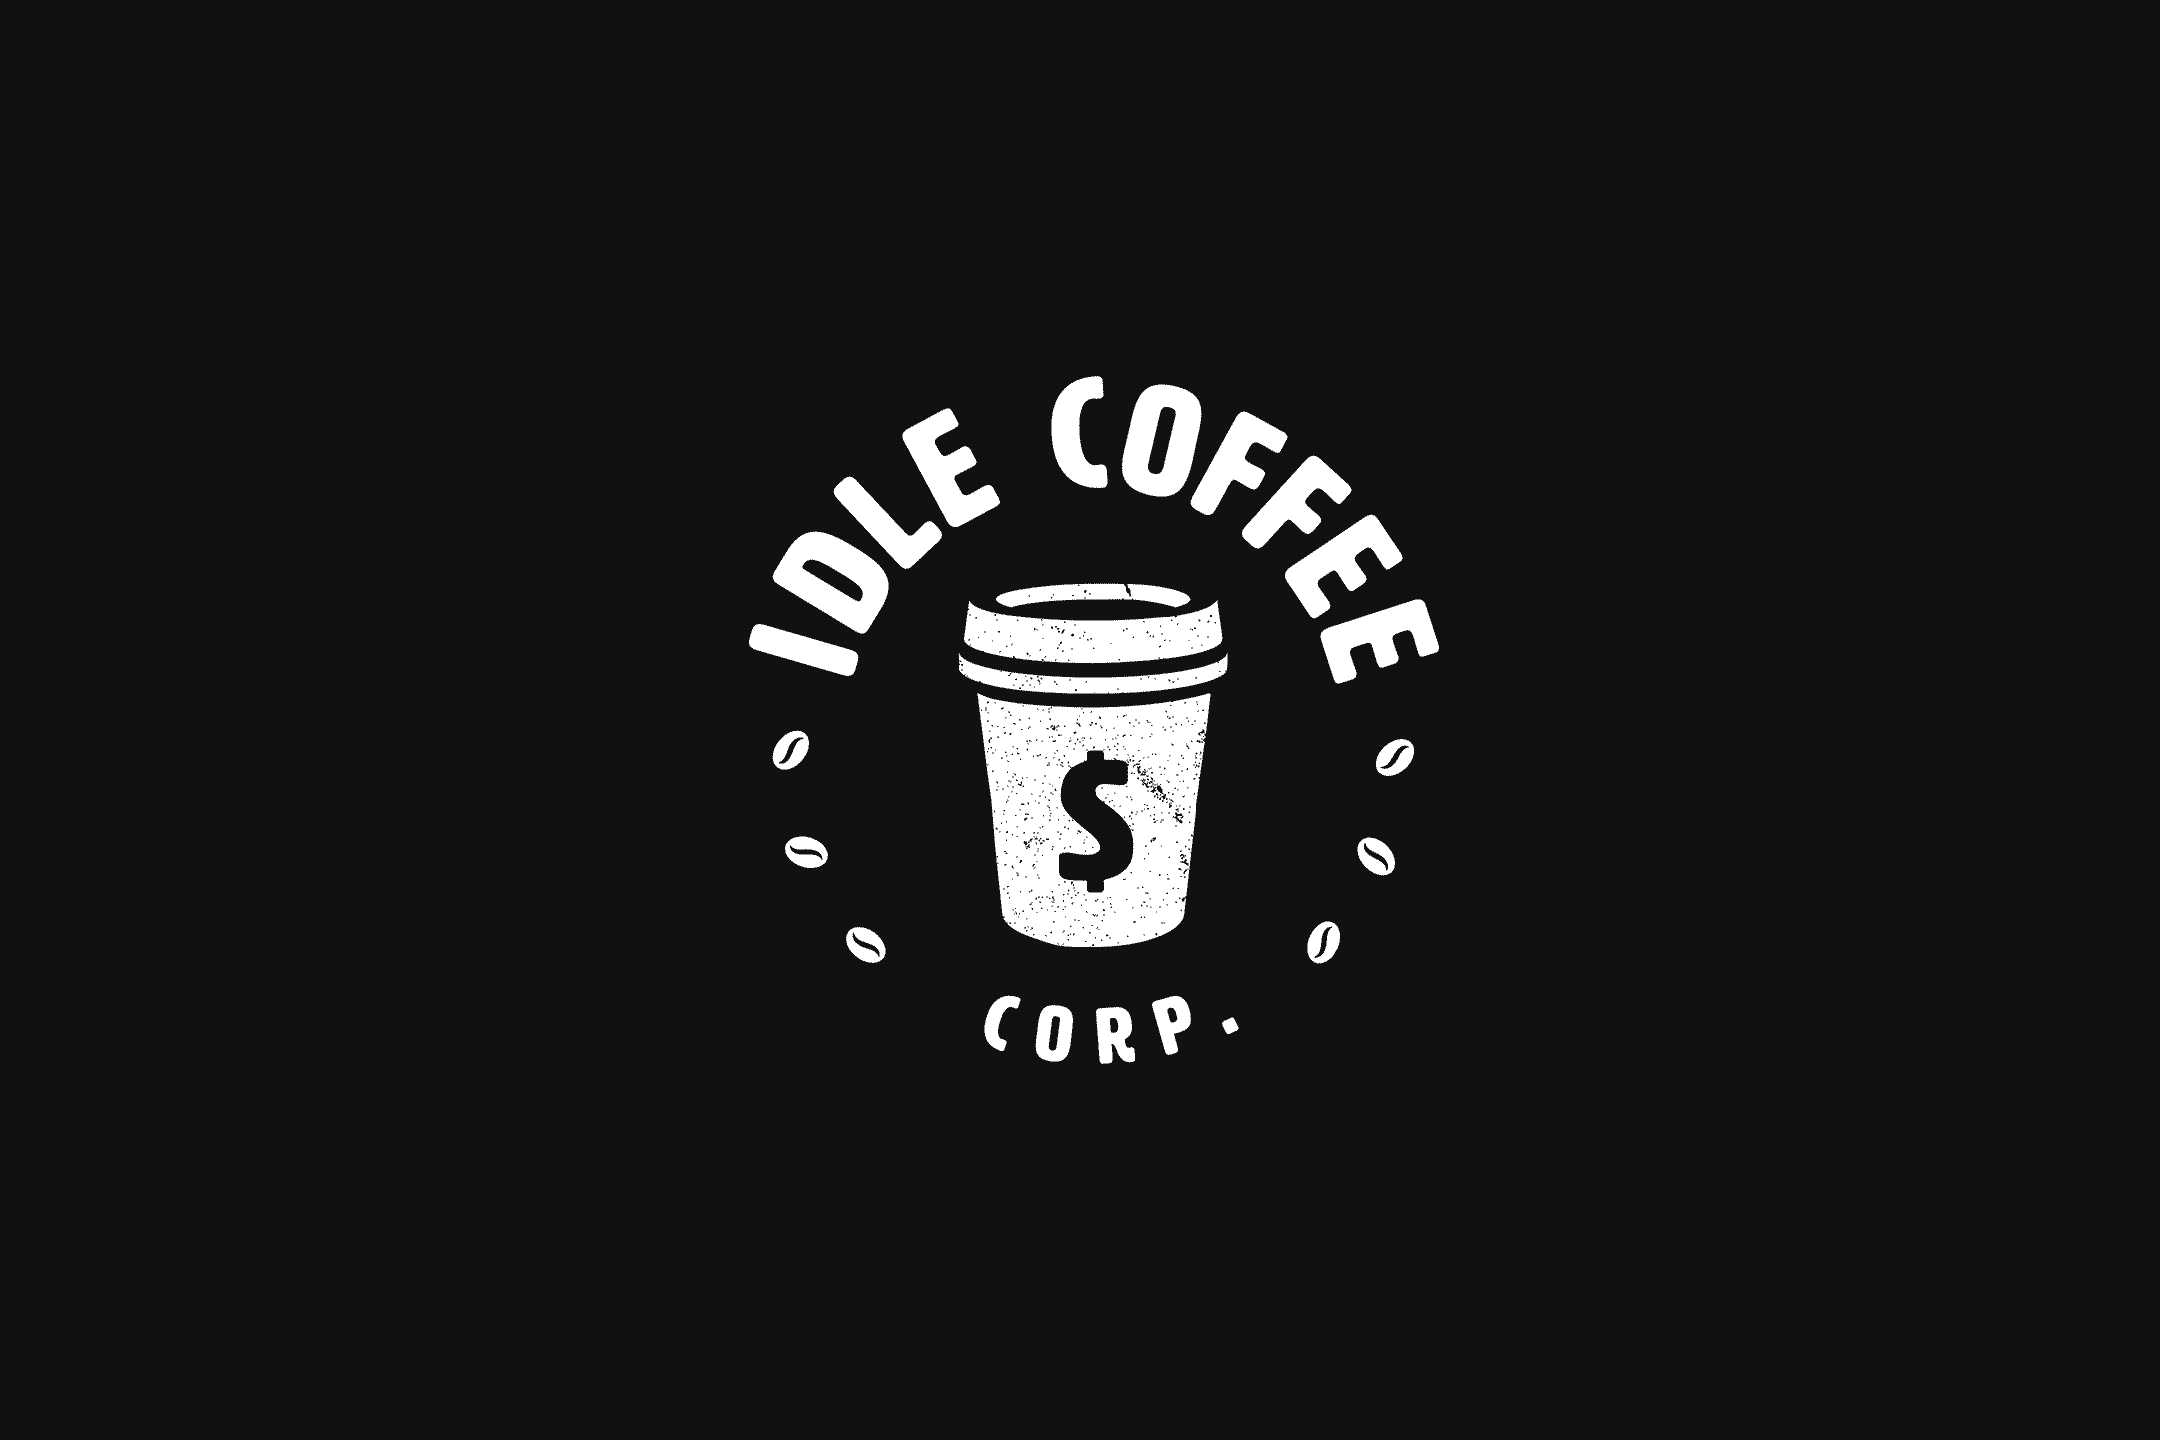 Idle coffee corp logo process